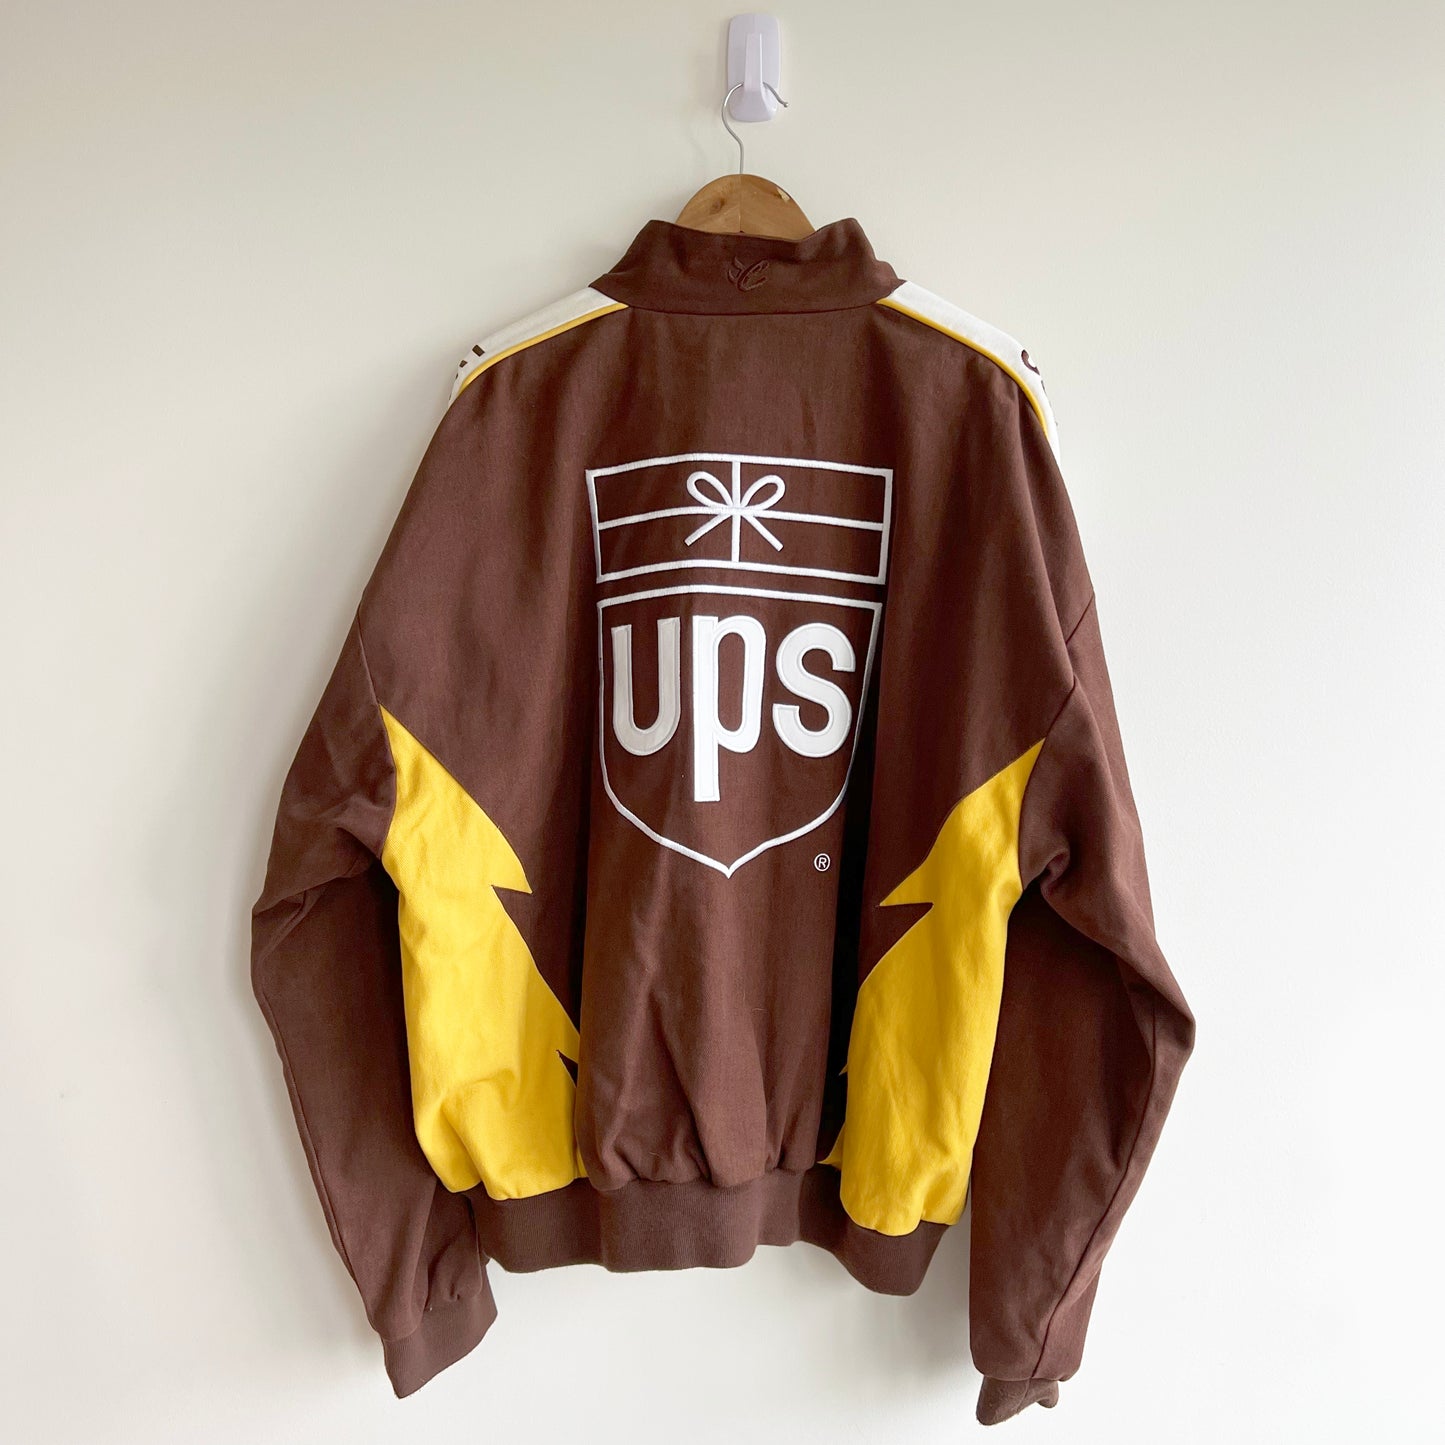 UPS Nascar Jacket